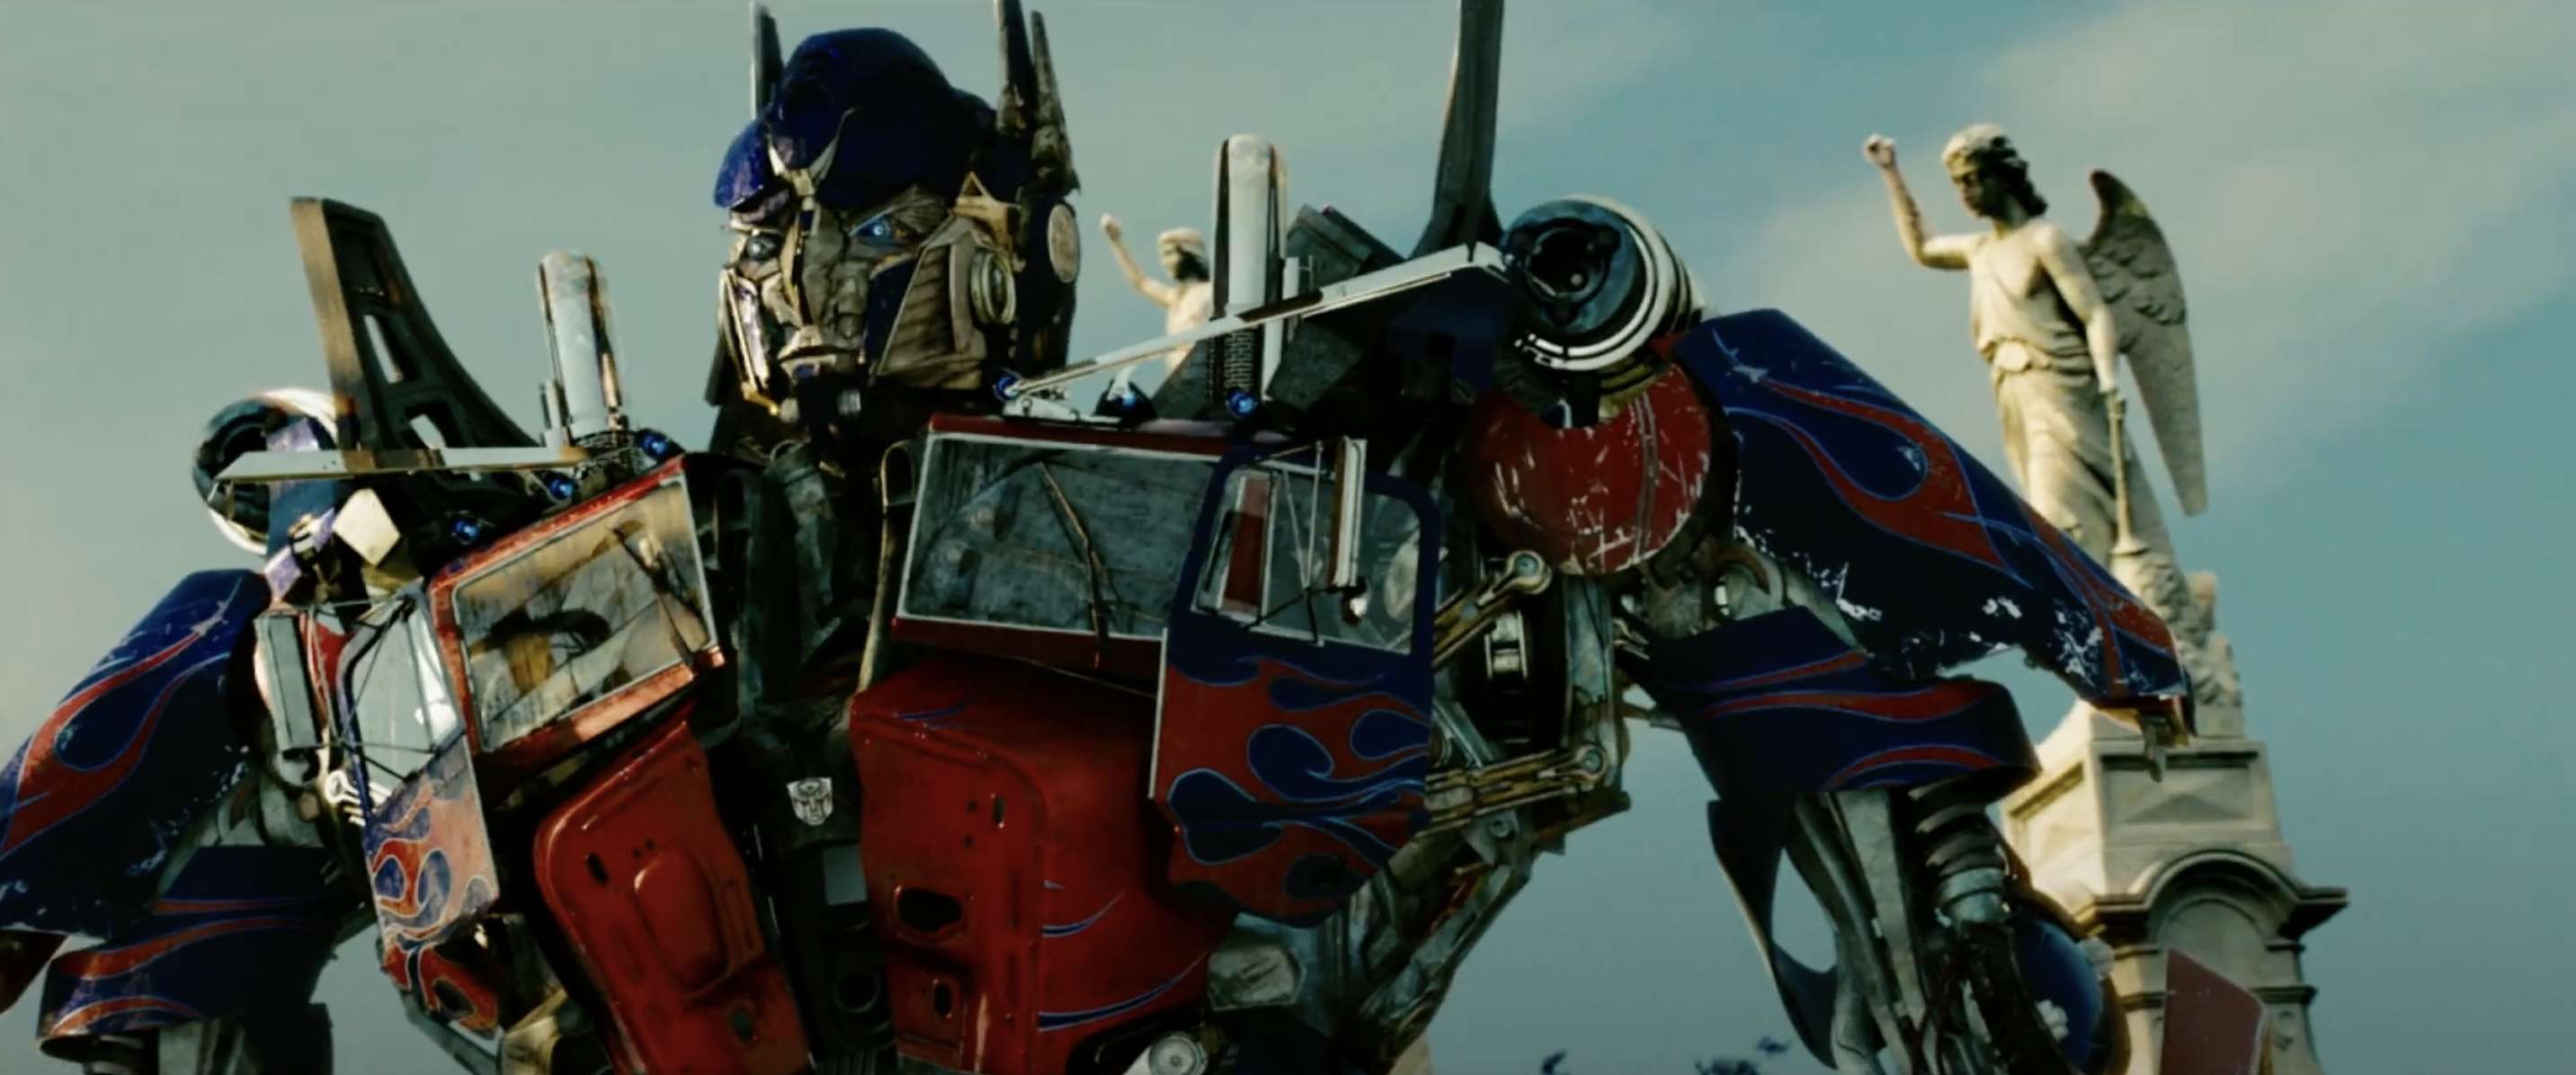 Transformers Optimus Prime official screen shot